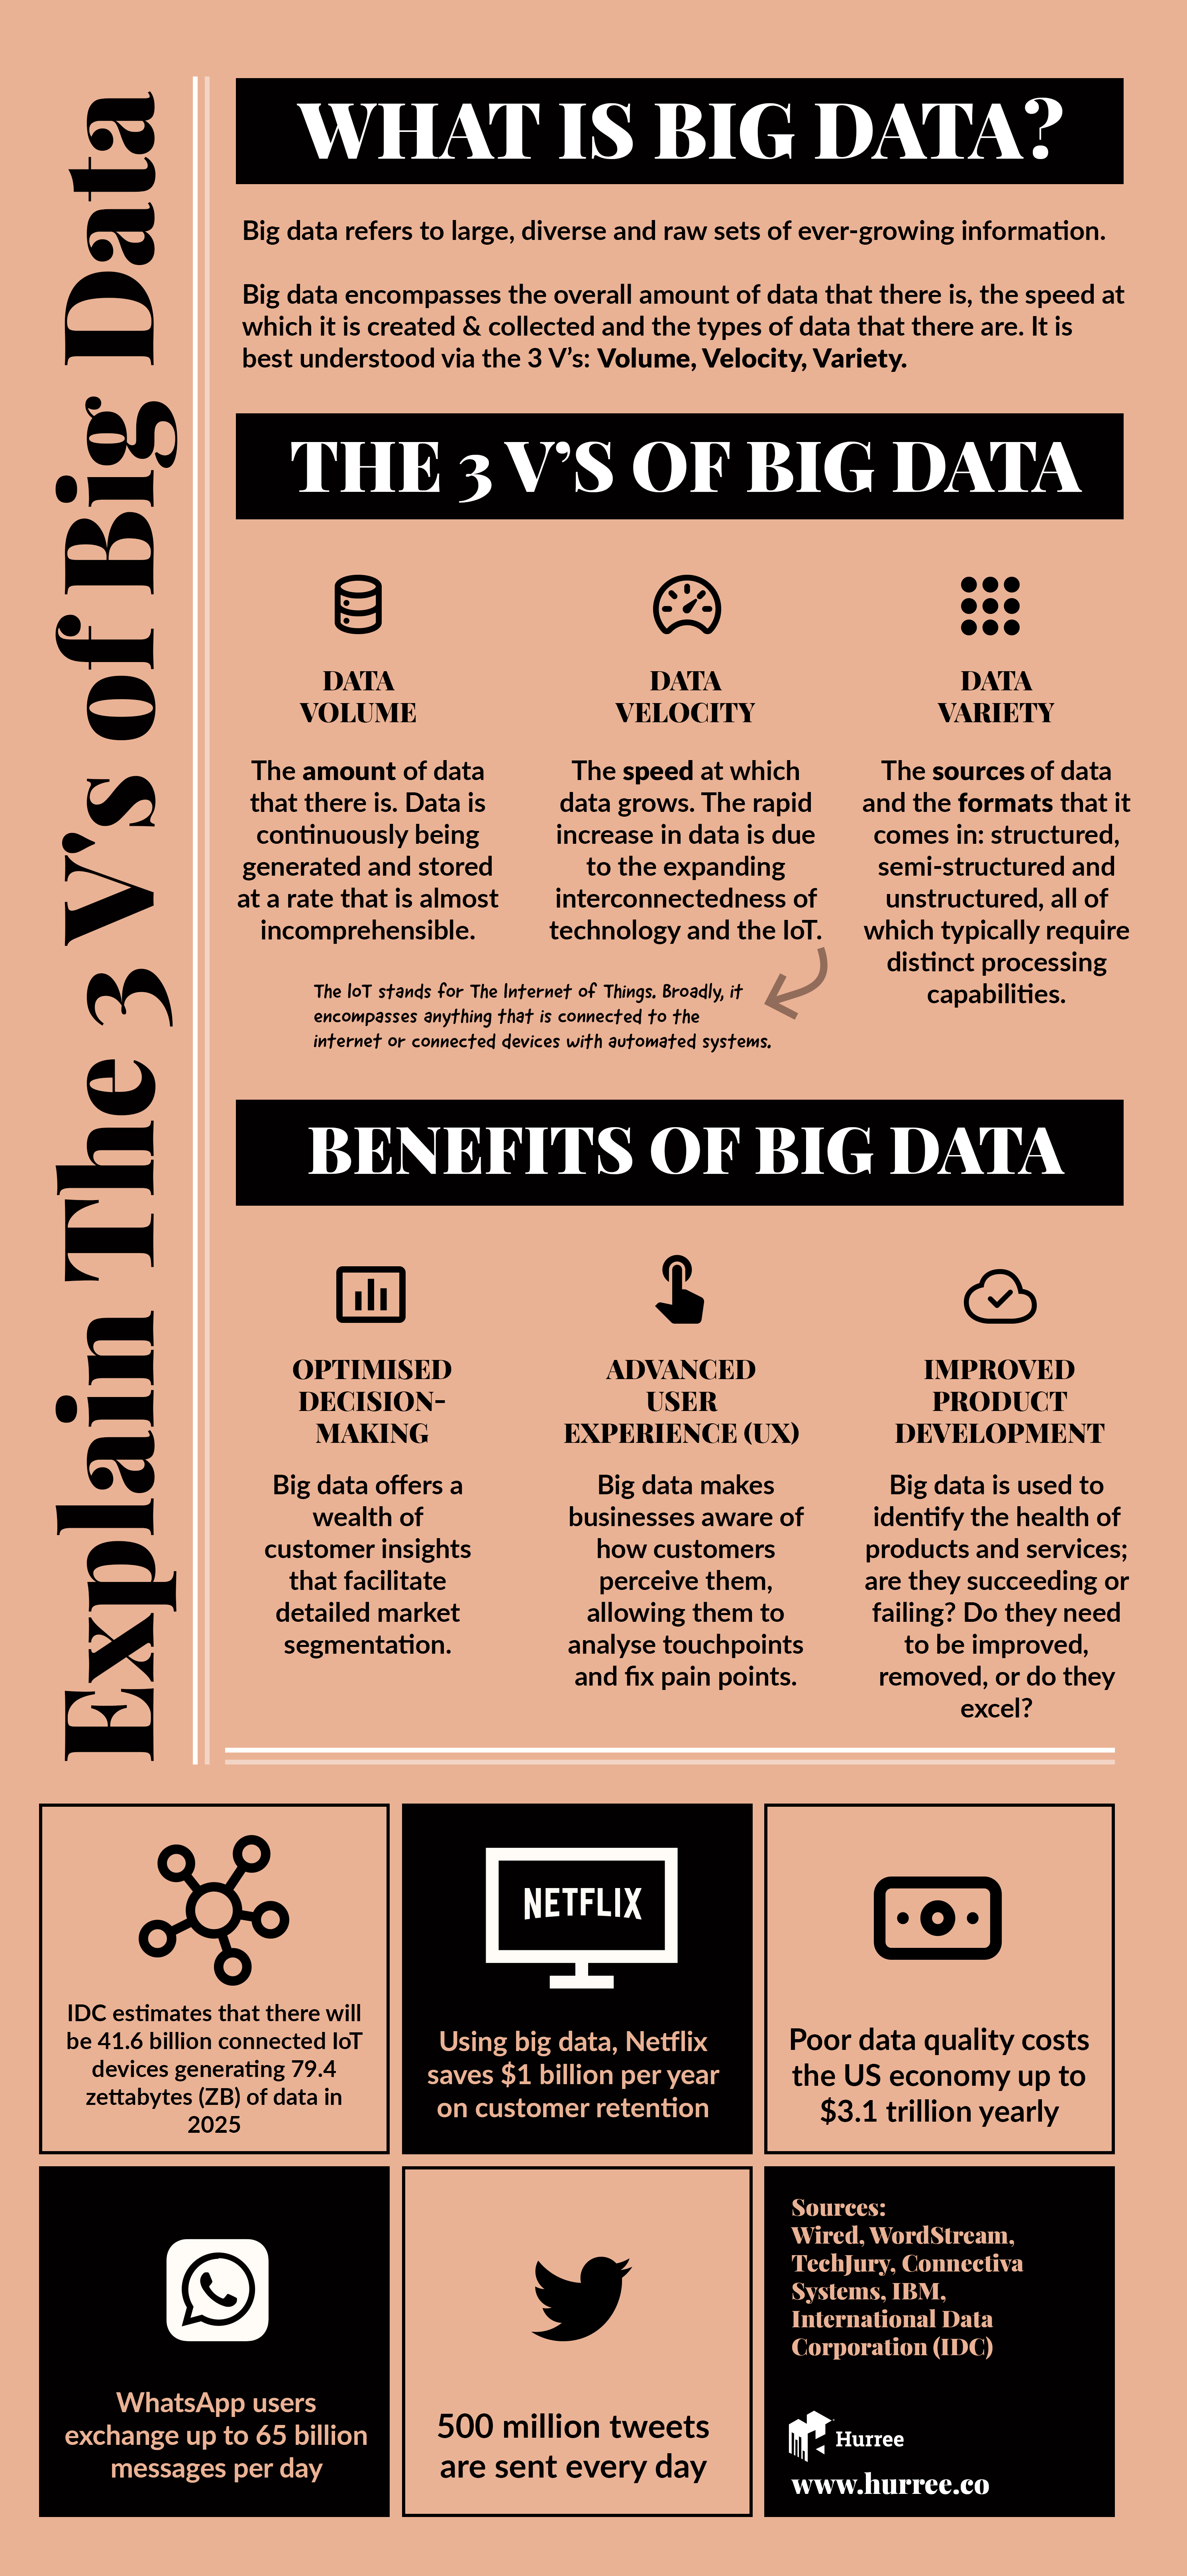 Infographic what are the 3 V's of big data? Explain the 3 V's of big data: data Volume, Data Velocity, Data Variety. Benefits of big data. Hurree - The Segmentation Platform